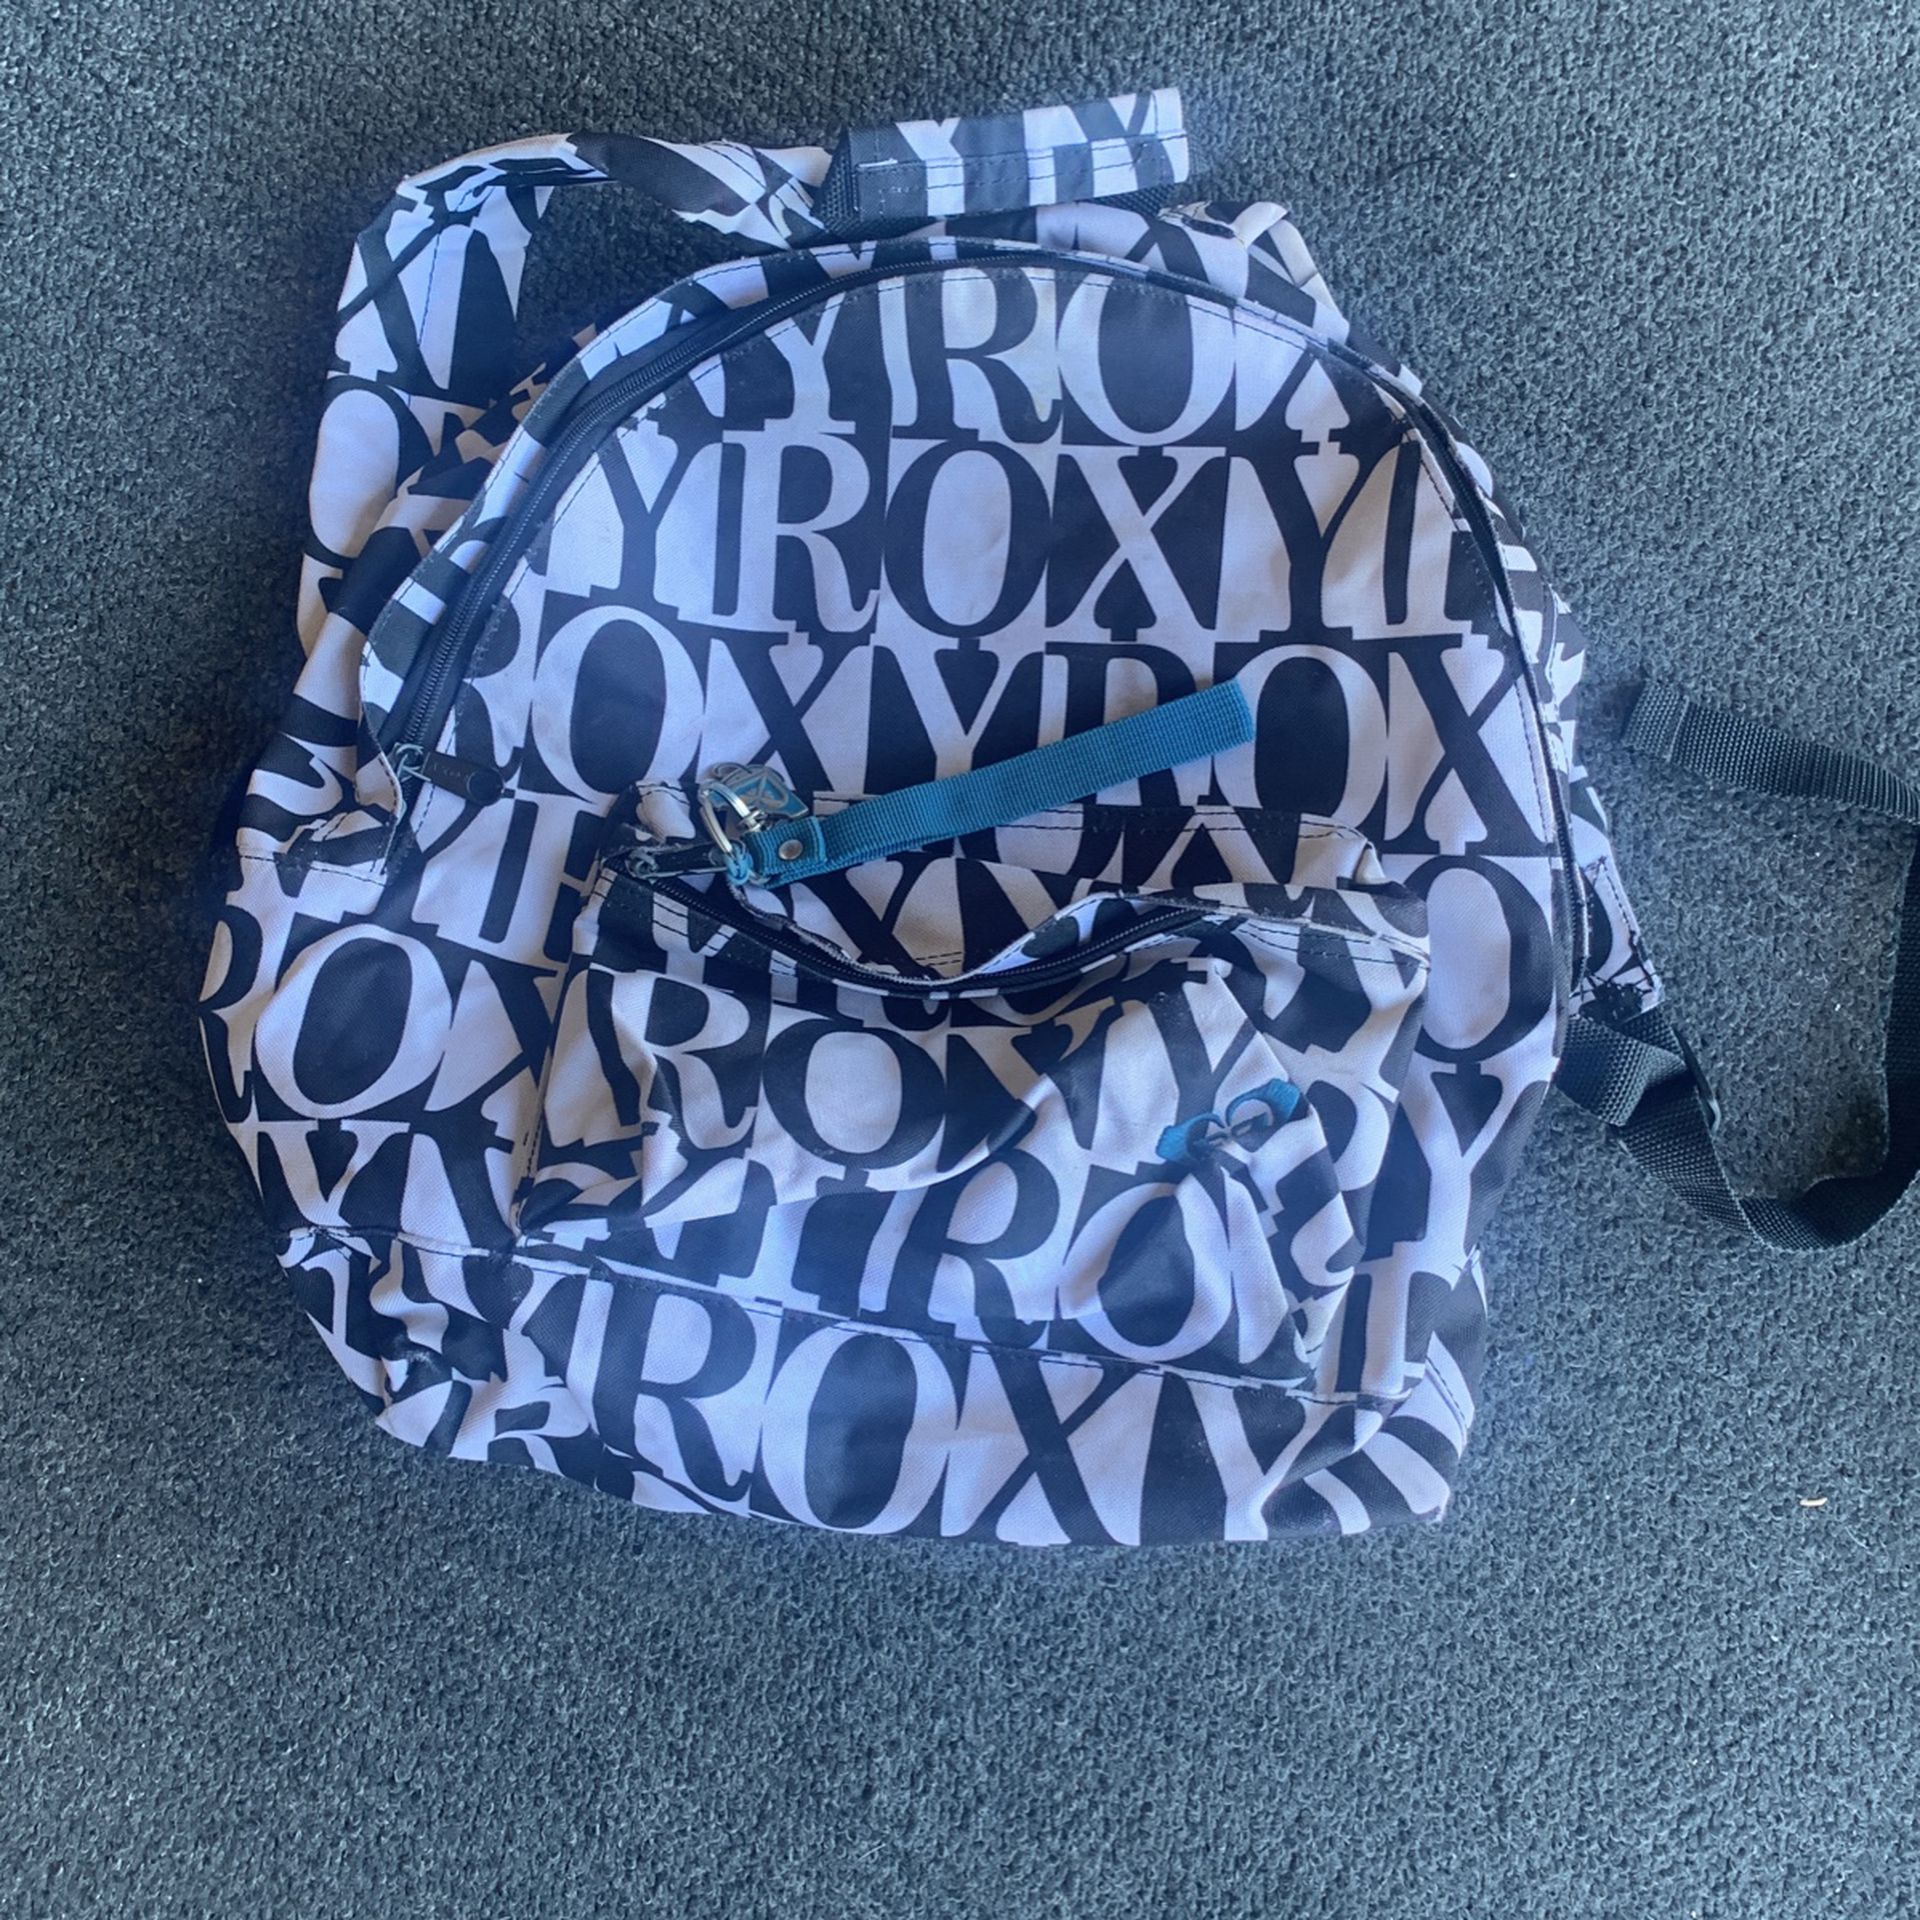 ROXY Backpack $10